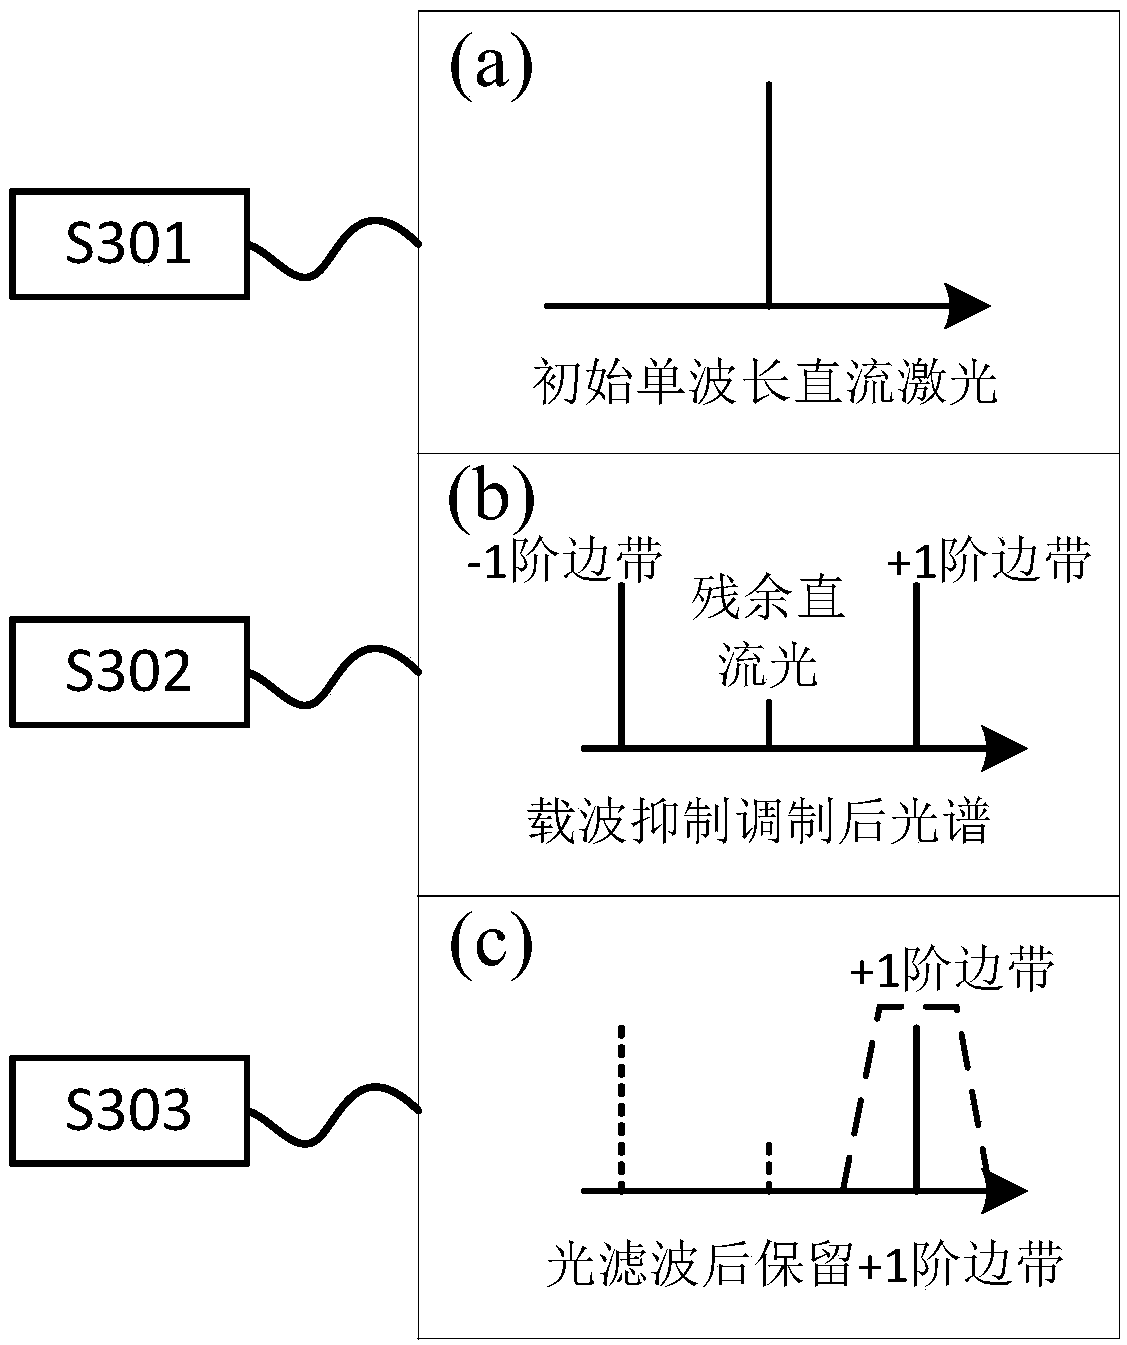 Wavelength-tunable multi-wavelength laser production system and method